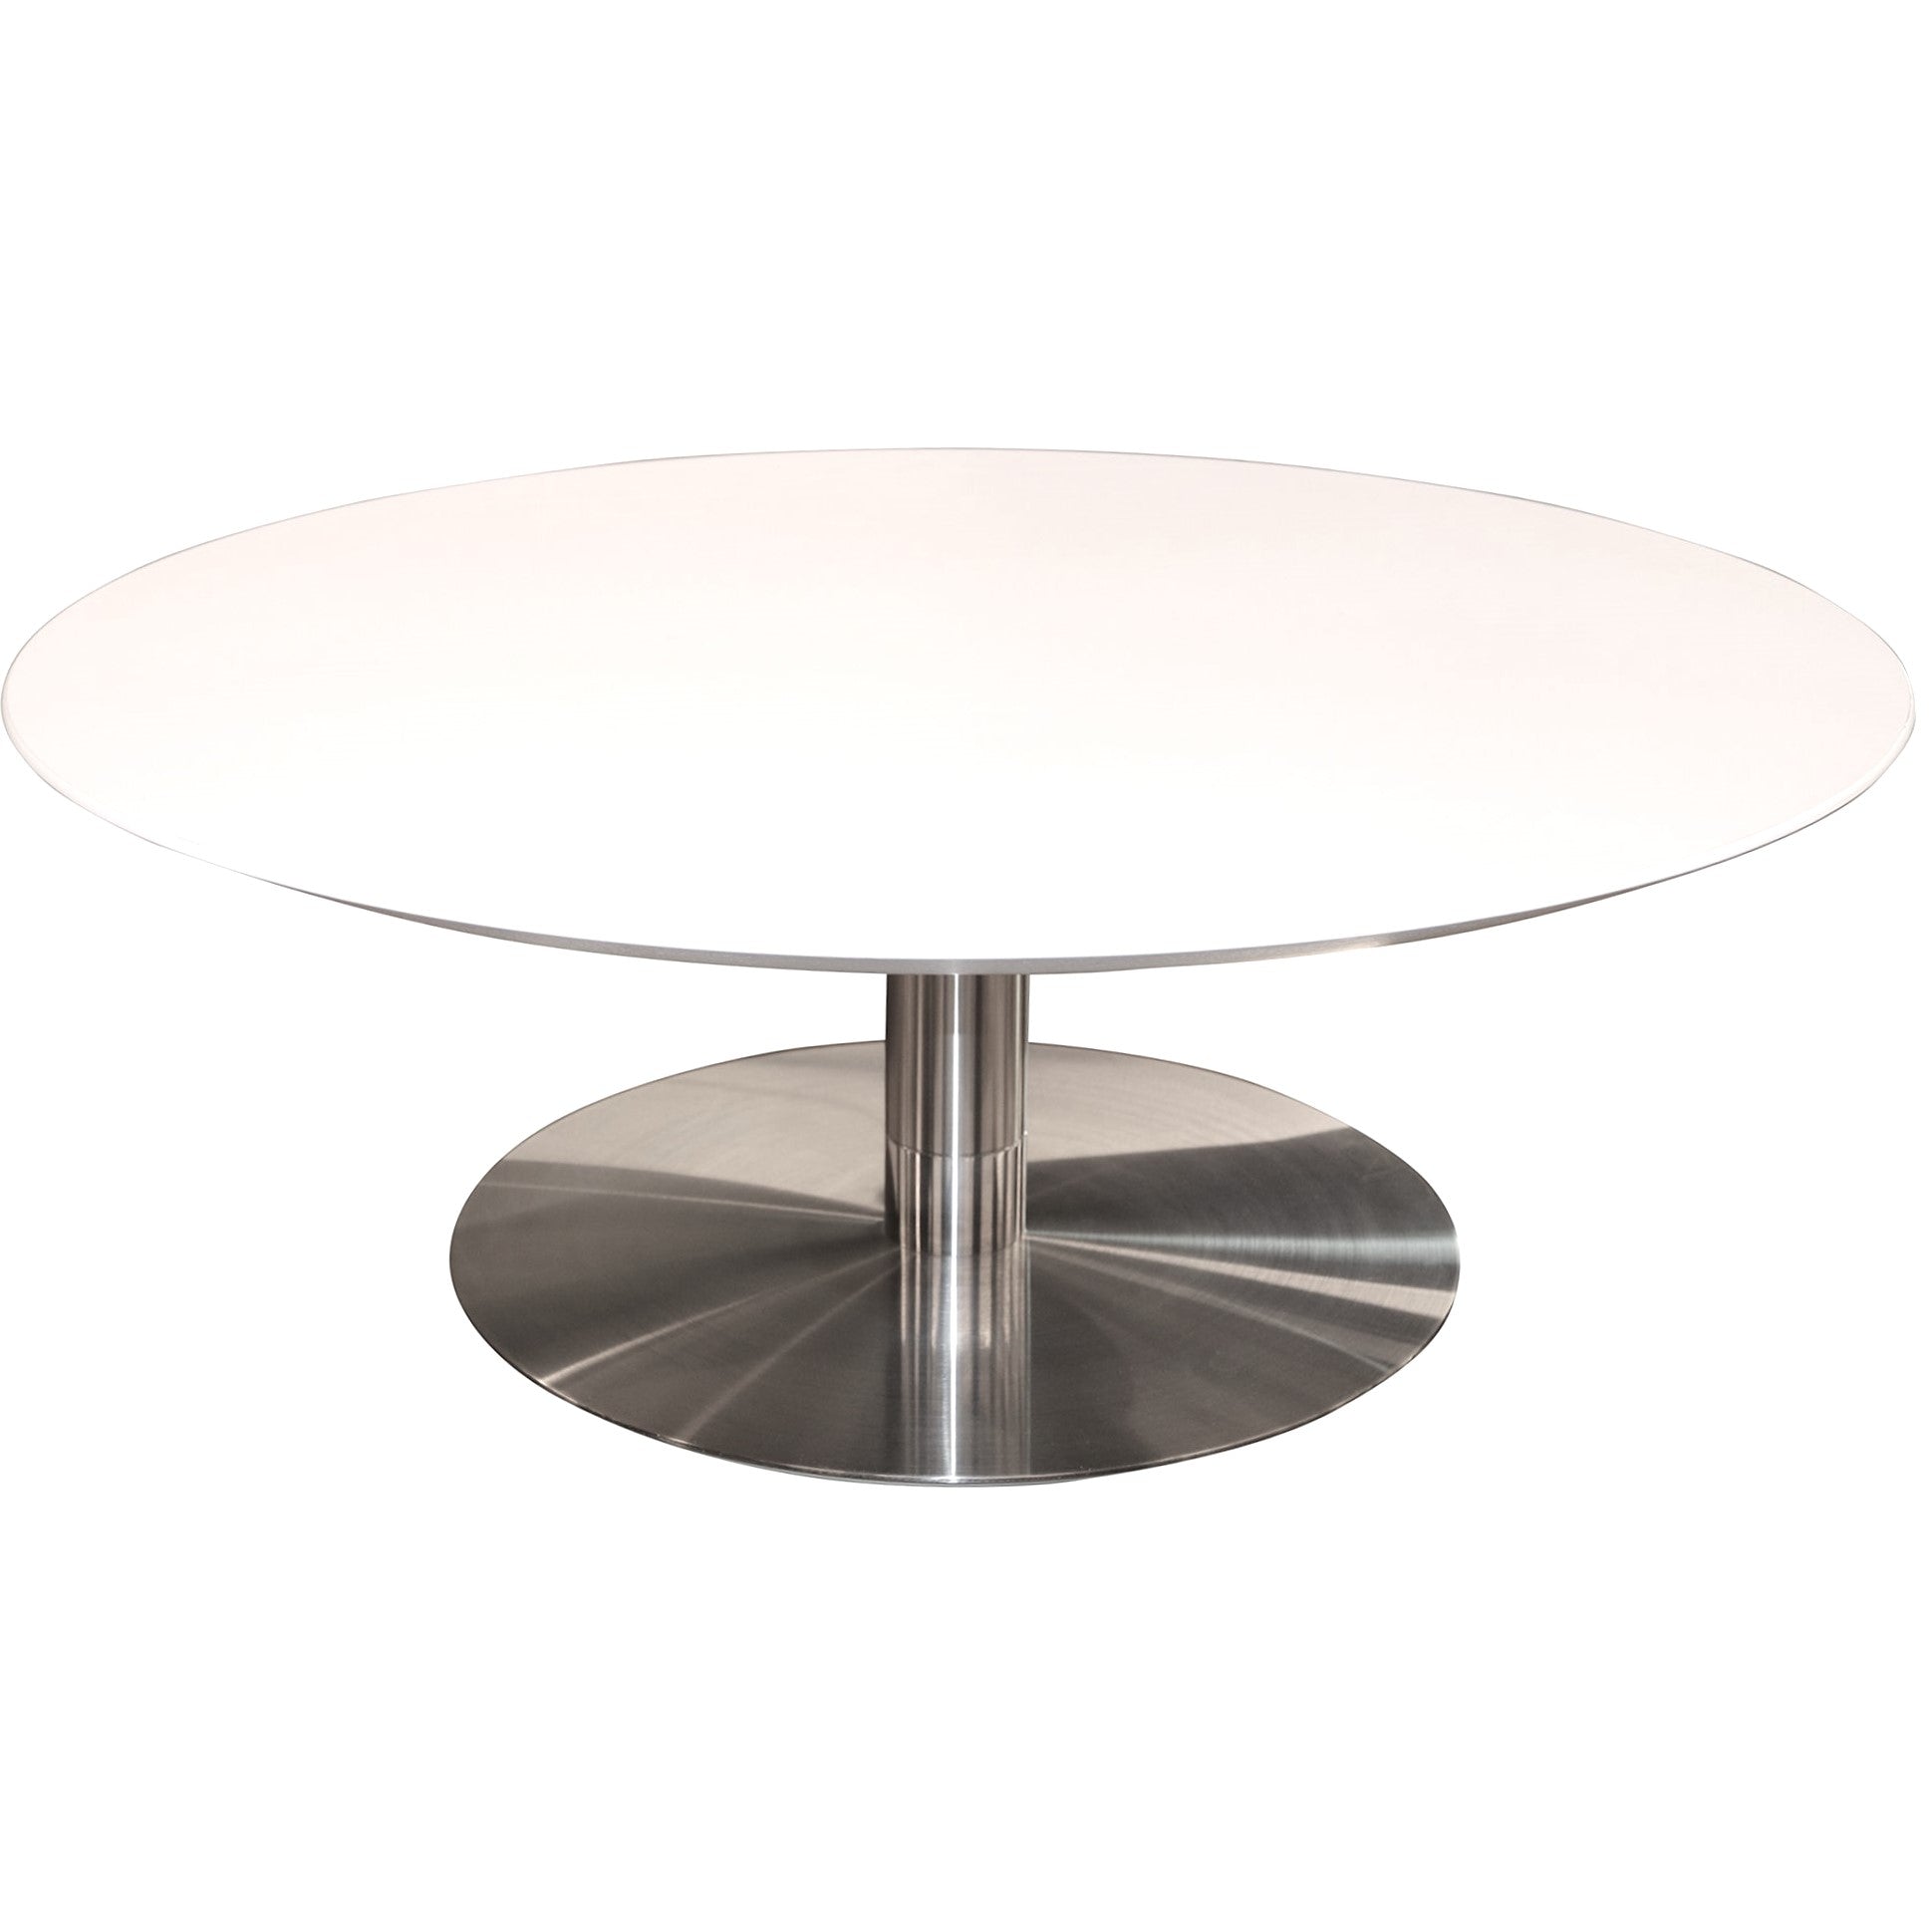 Bernhardt Design Quiet 36in Round Table, White - Preowned